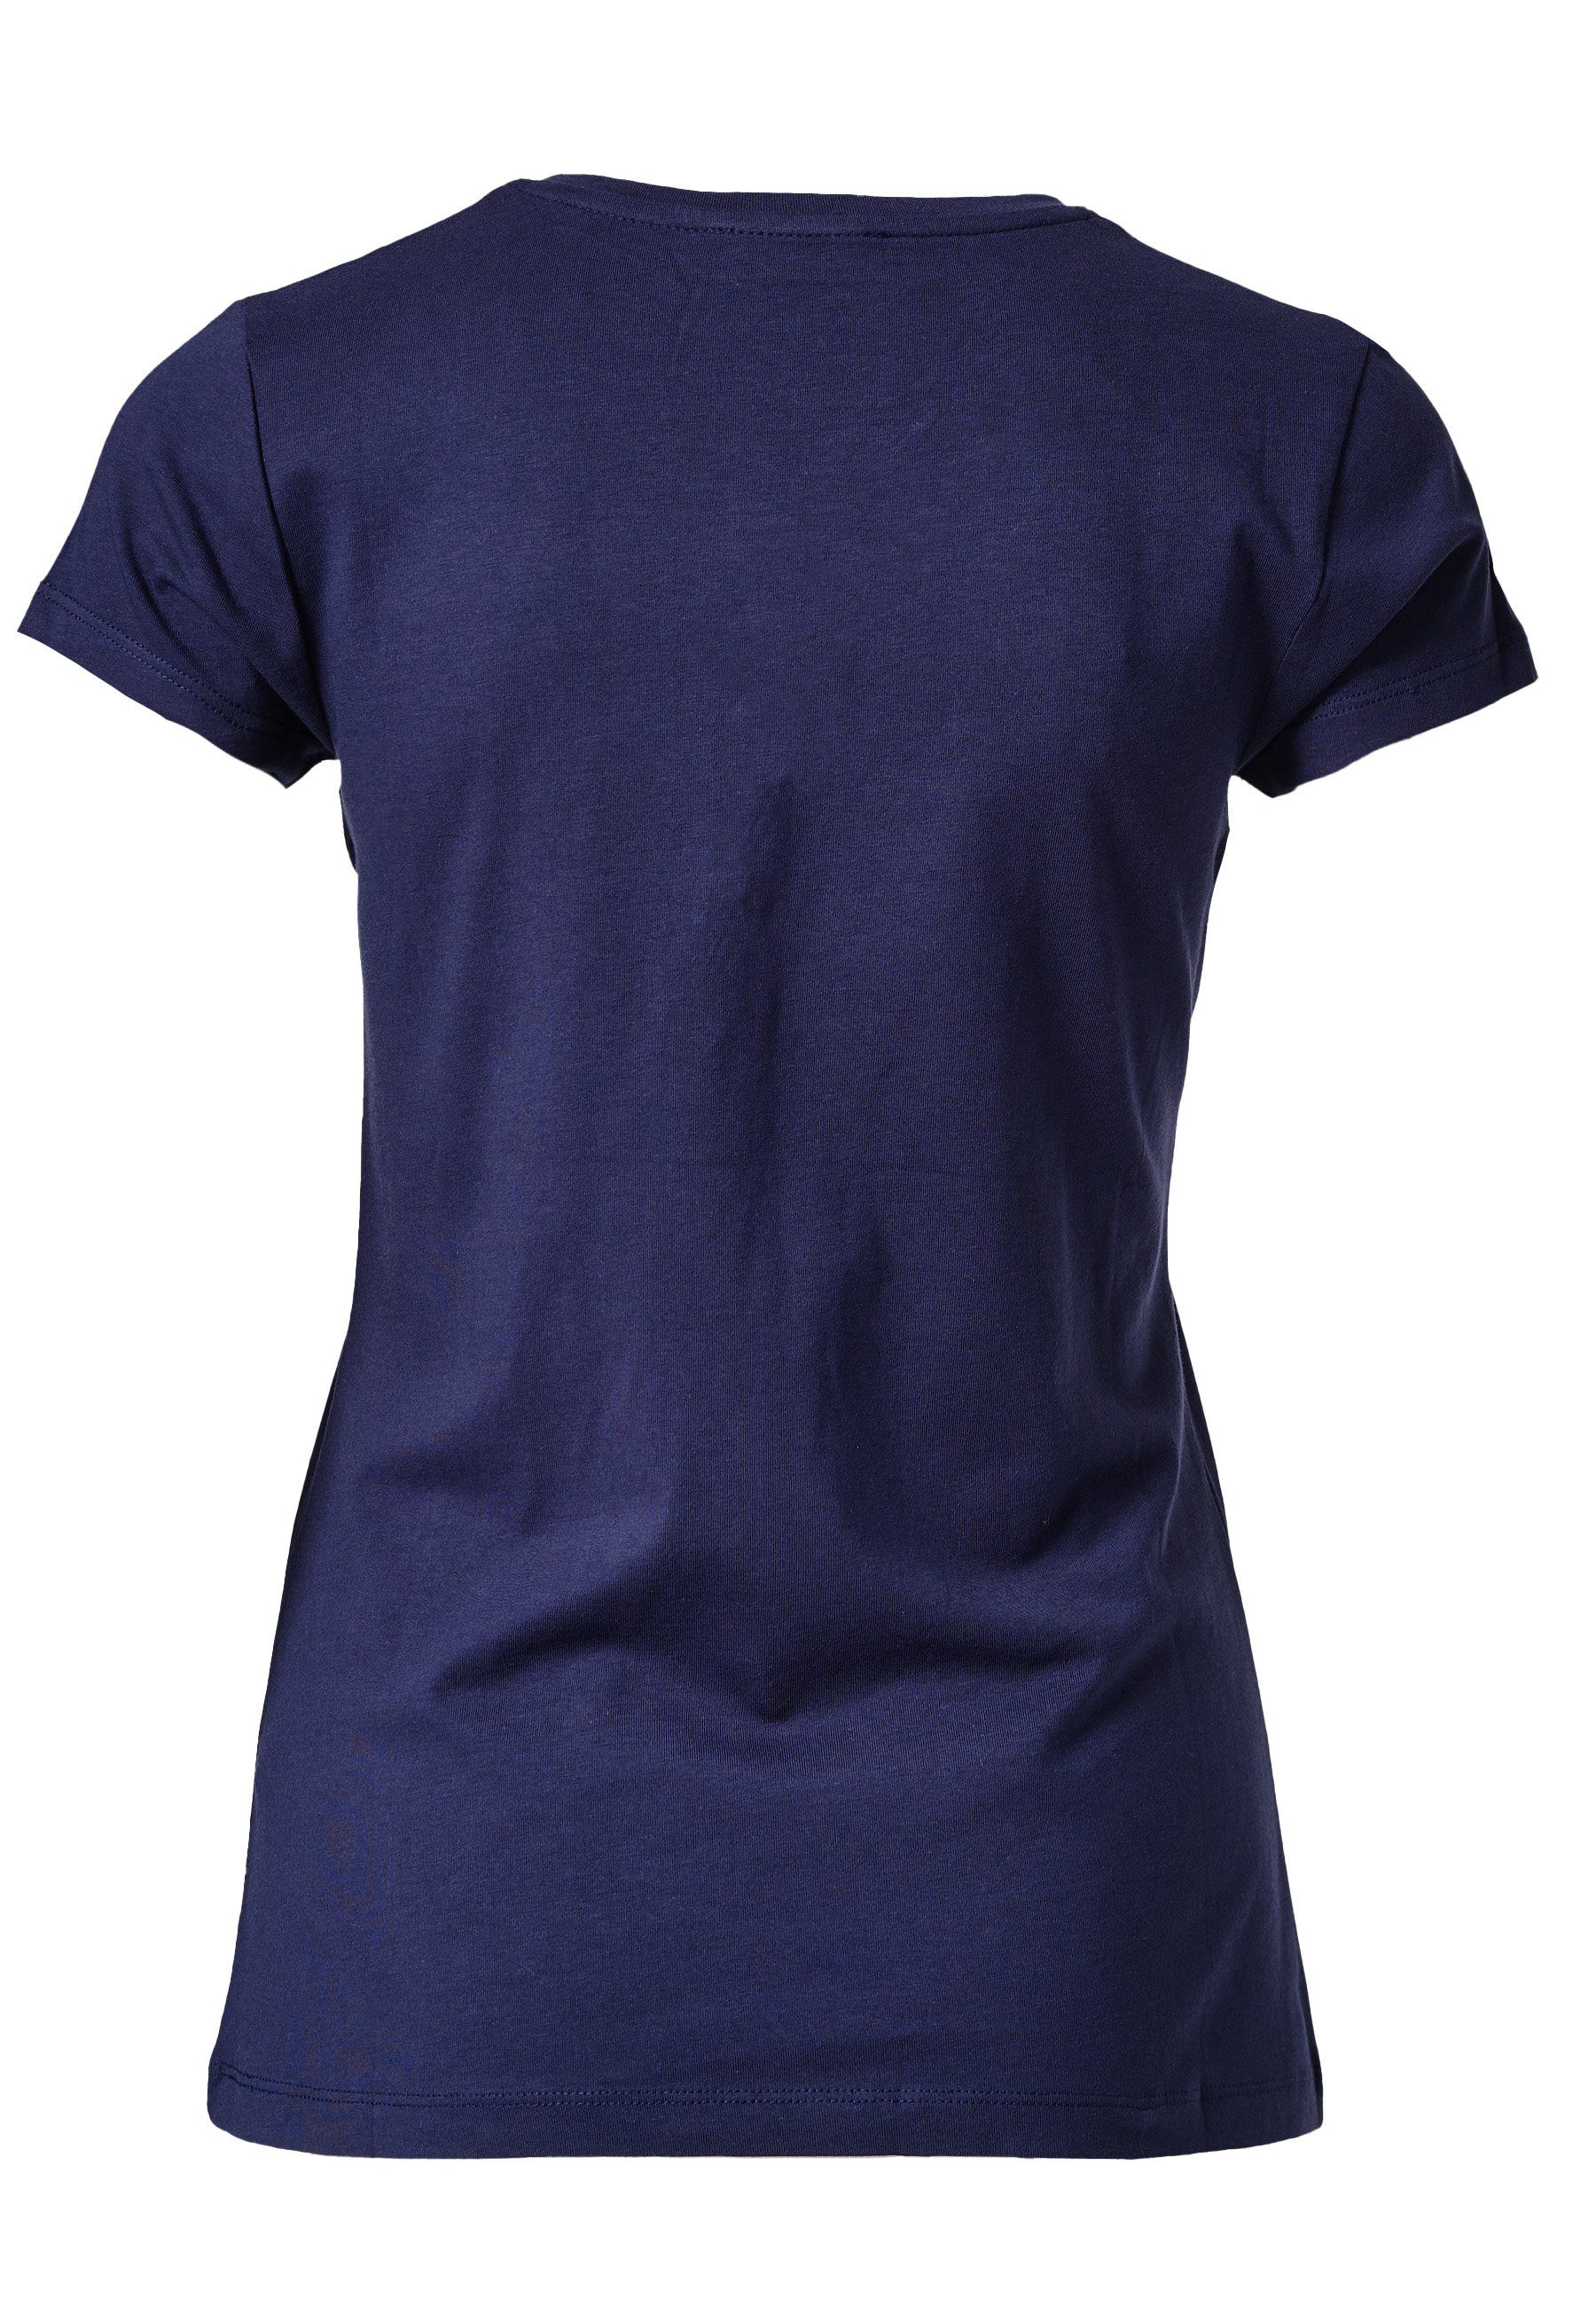 blau Decay Front-Print mit T-Shirt